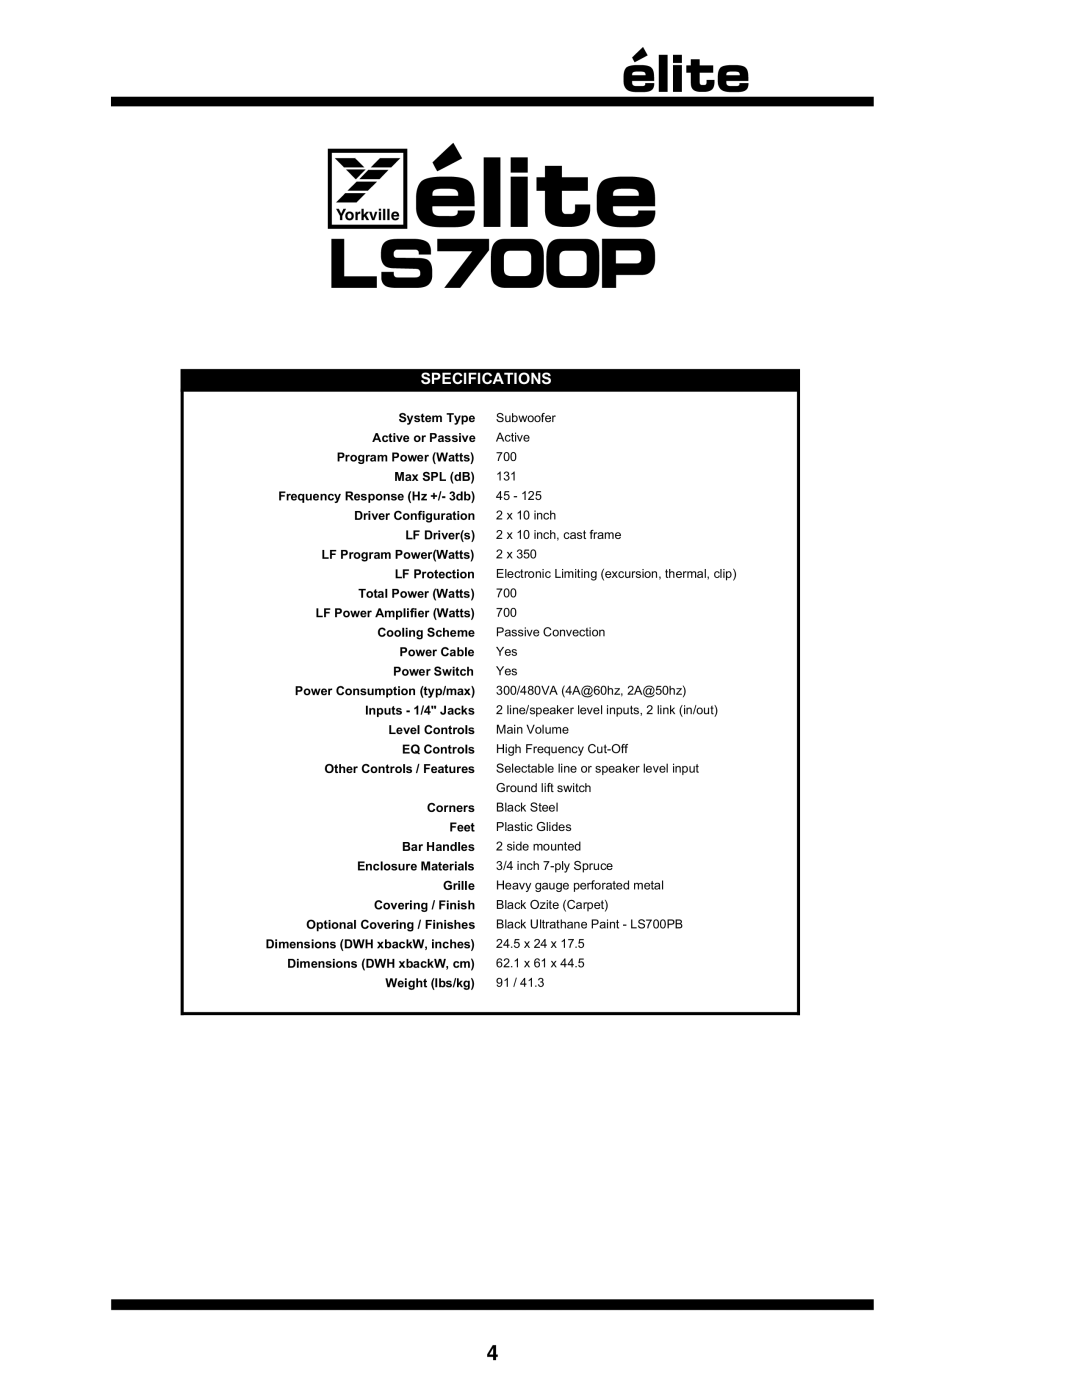 Elite ES700P LS700P, Yorkville, Specifications, System Type, Active or Passive, Program Power Watts, Max SPL dB, Corners 